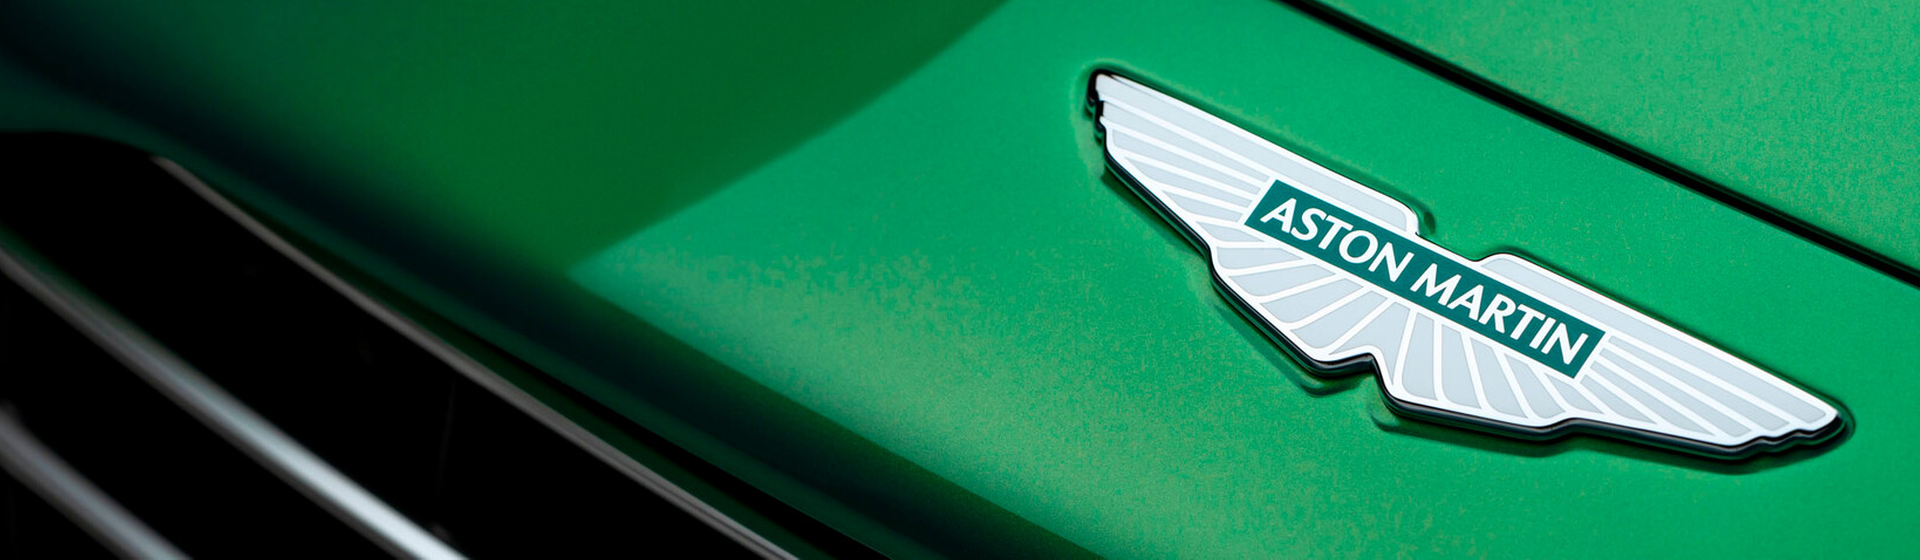 Logo auf grünem Aston Martin